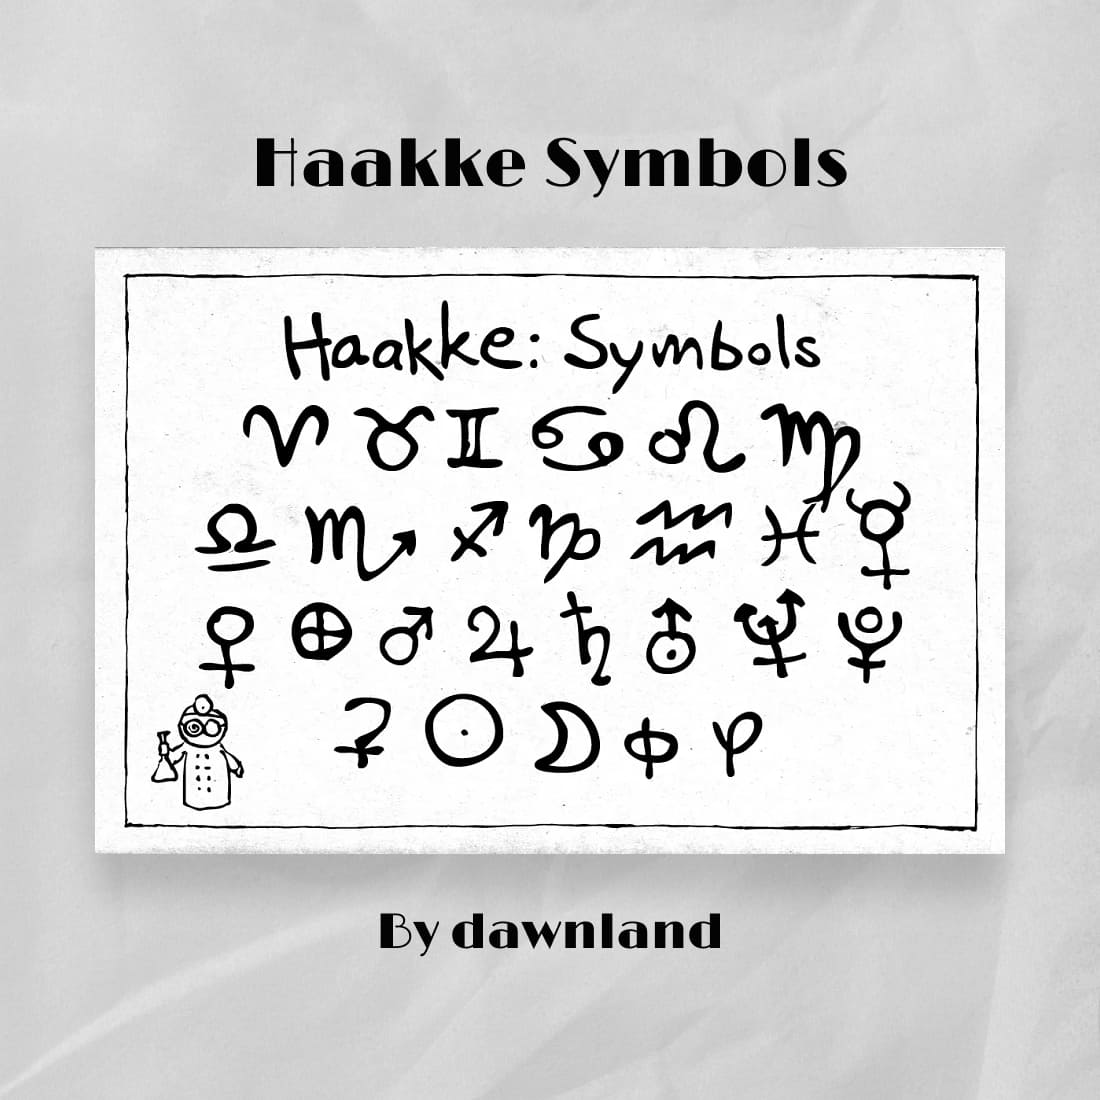 Haakke Symbols.